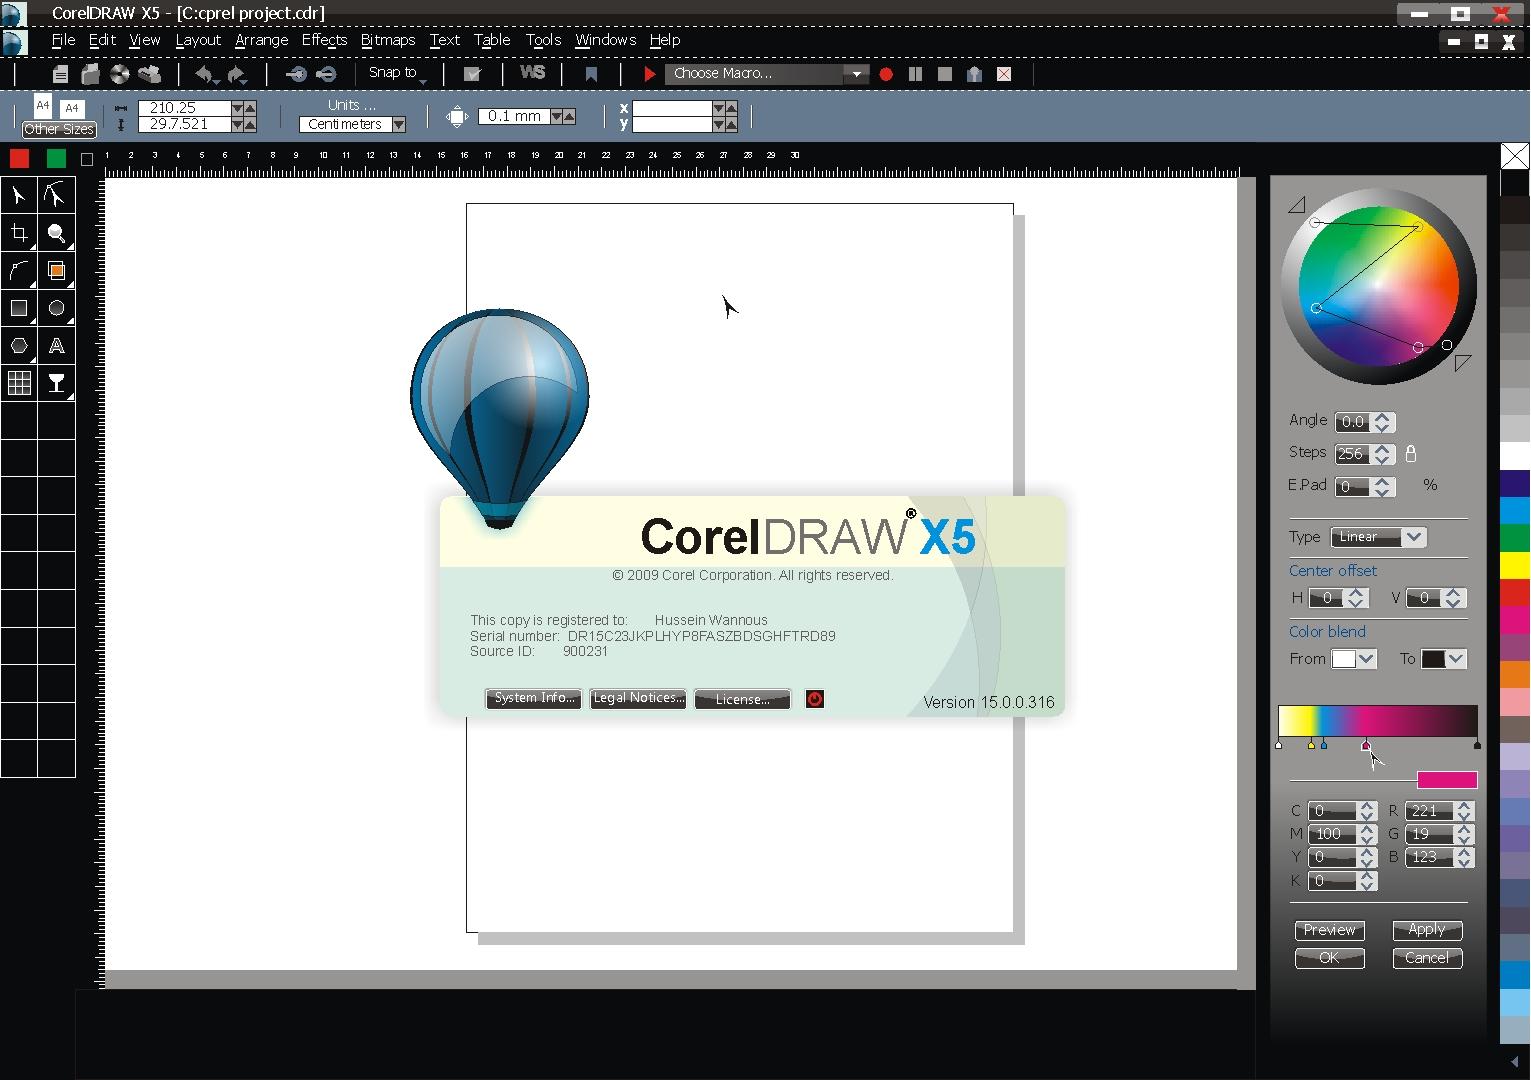 corel draw x5 clipart free download - photo #22